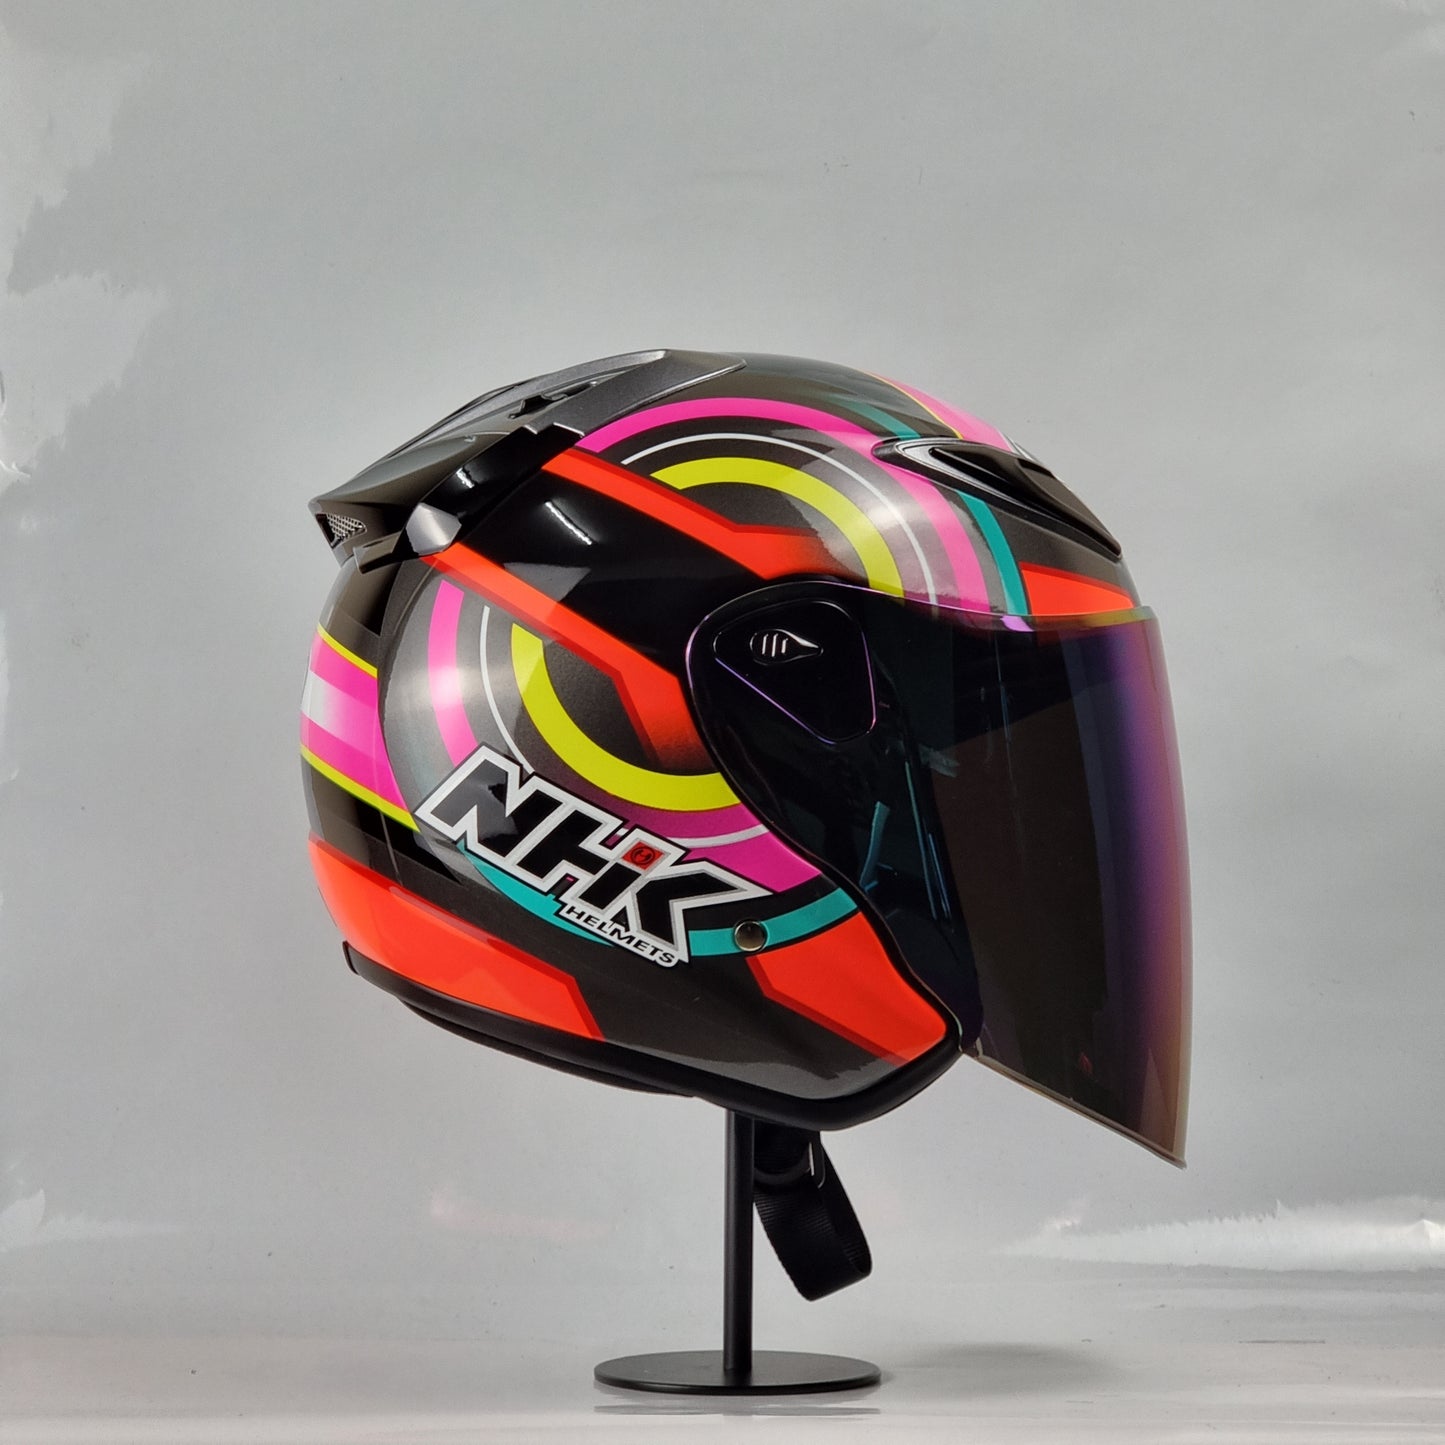 NHK Helmet R6 v2 Xion (Black/Orange Glossy)